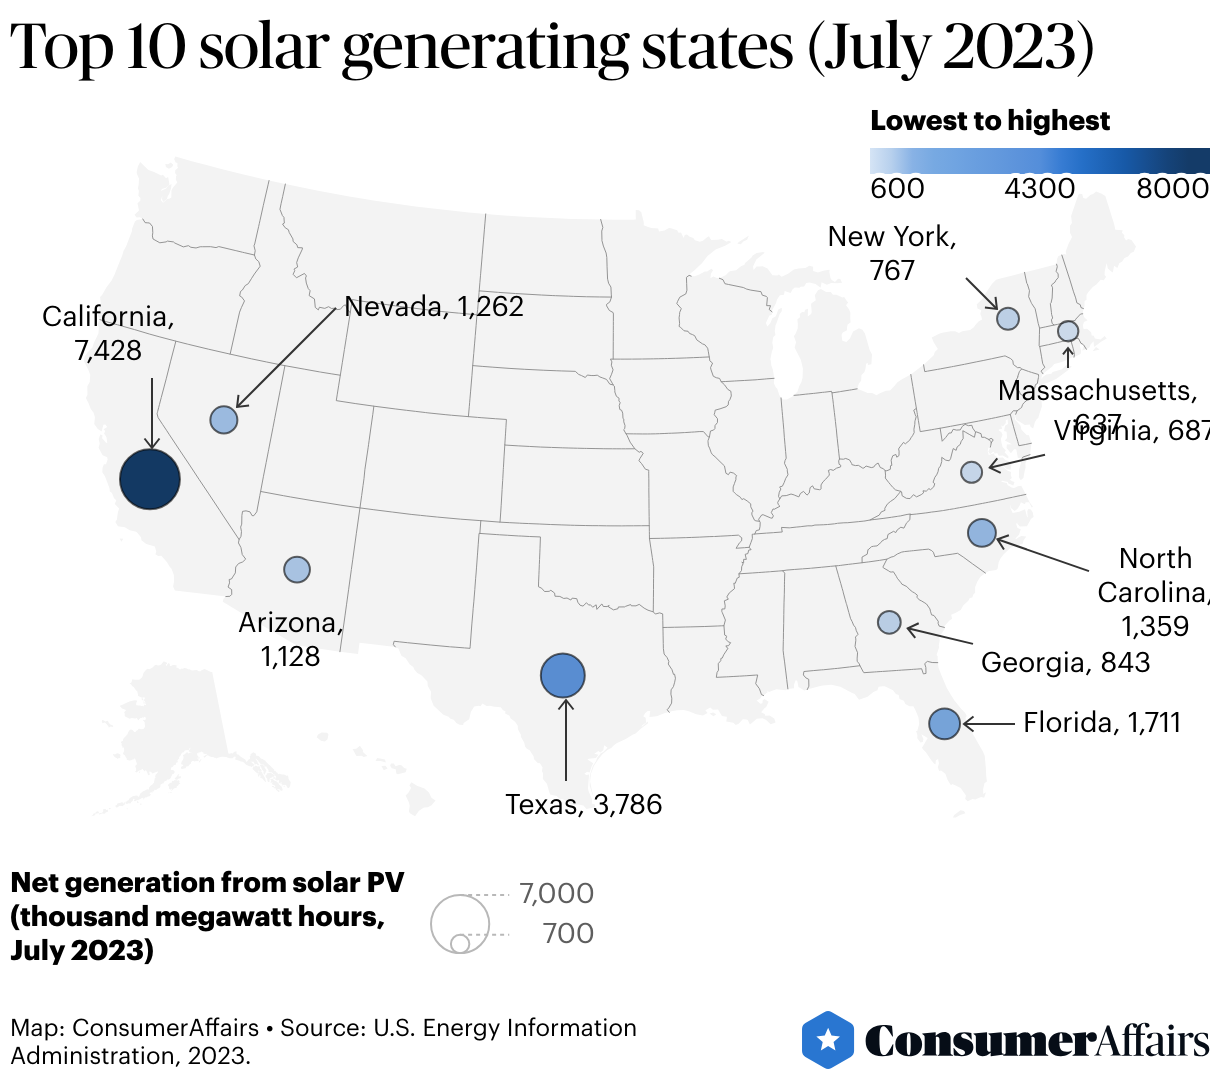 Top 10 solar generating states (July 2023)